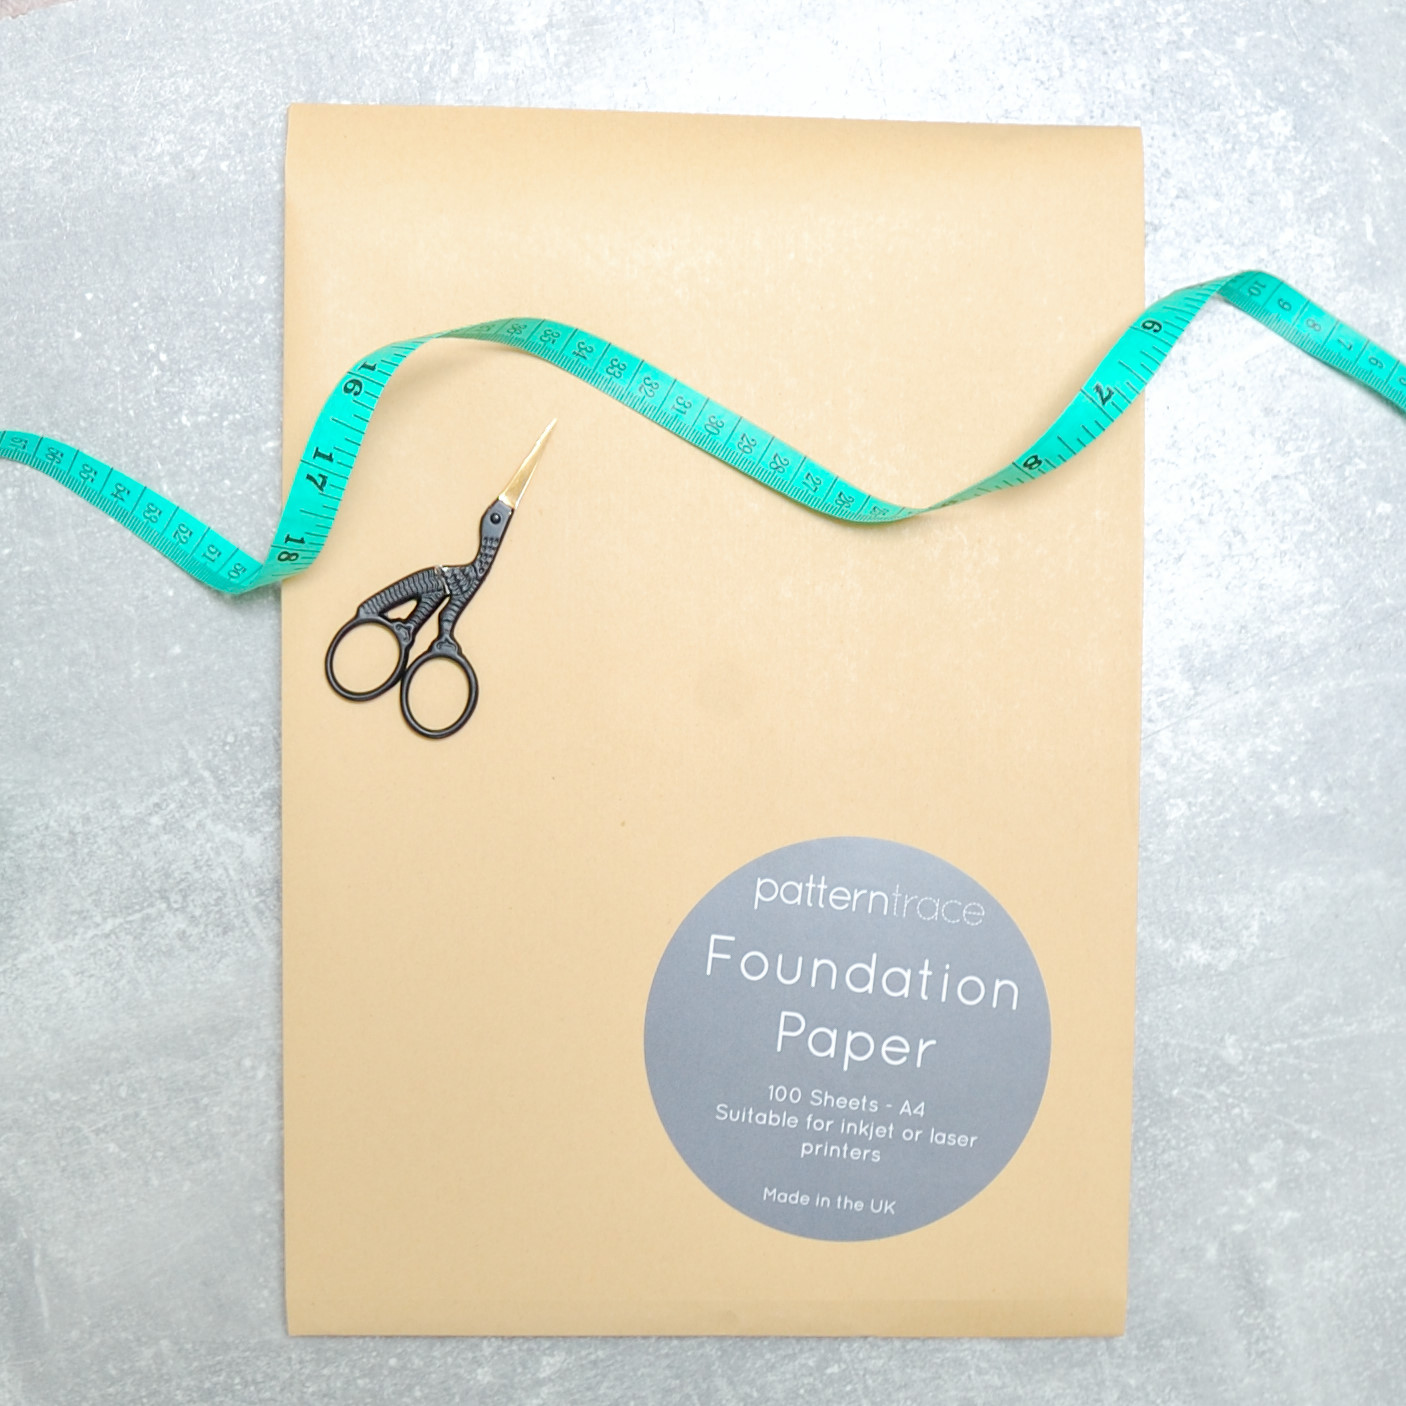 Foundation Paper - Patterntrace